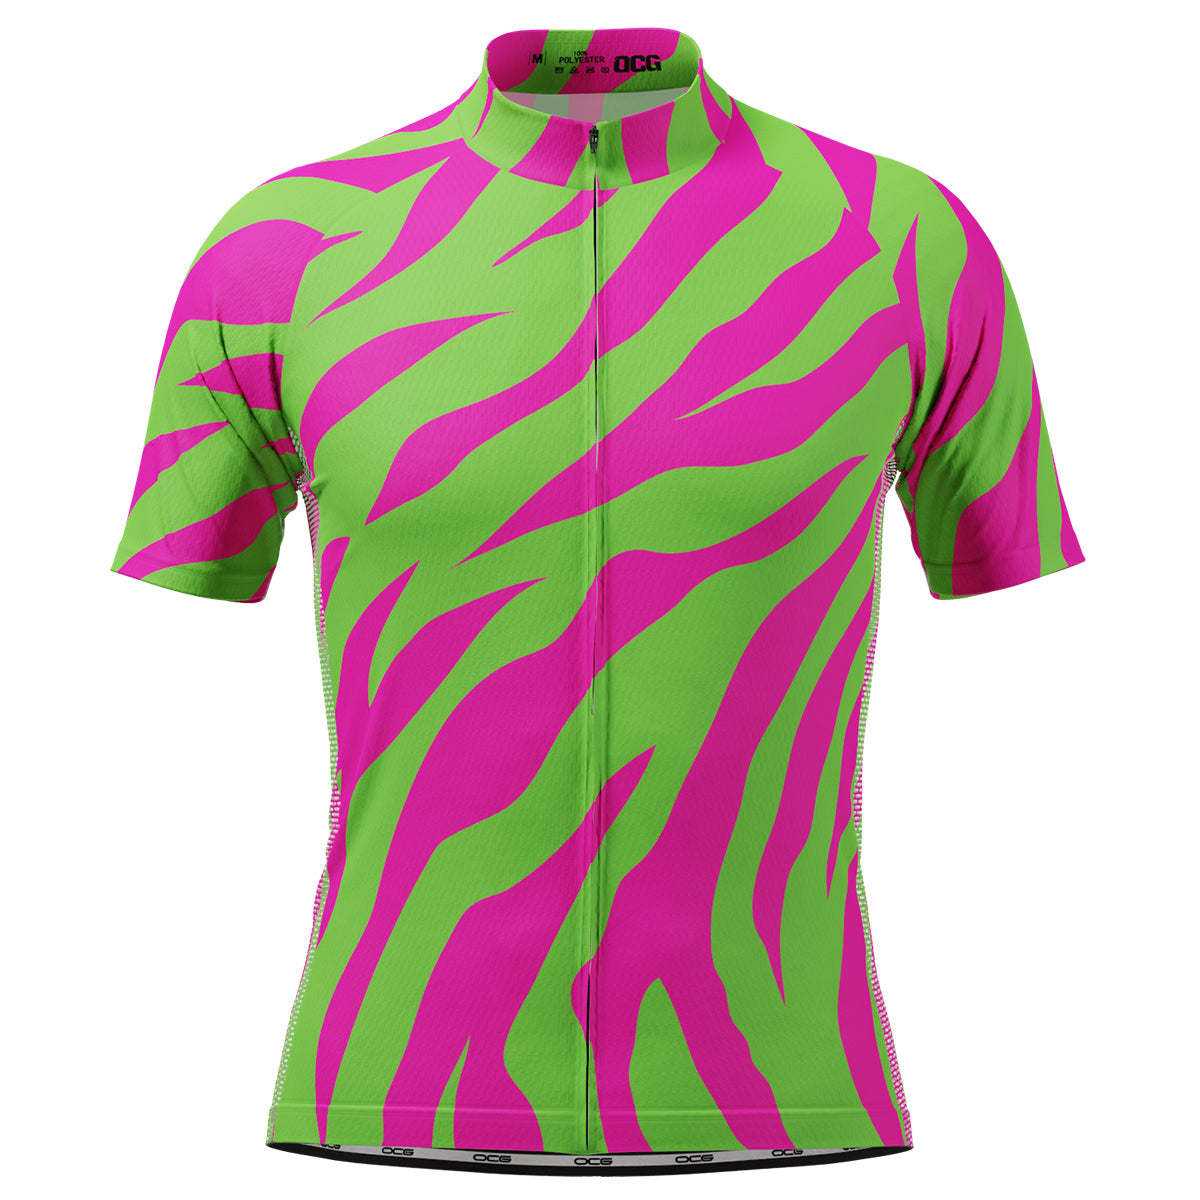 Men's Green & Pink Tiger Print Short Sleeve Cycling Jersey